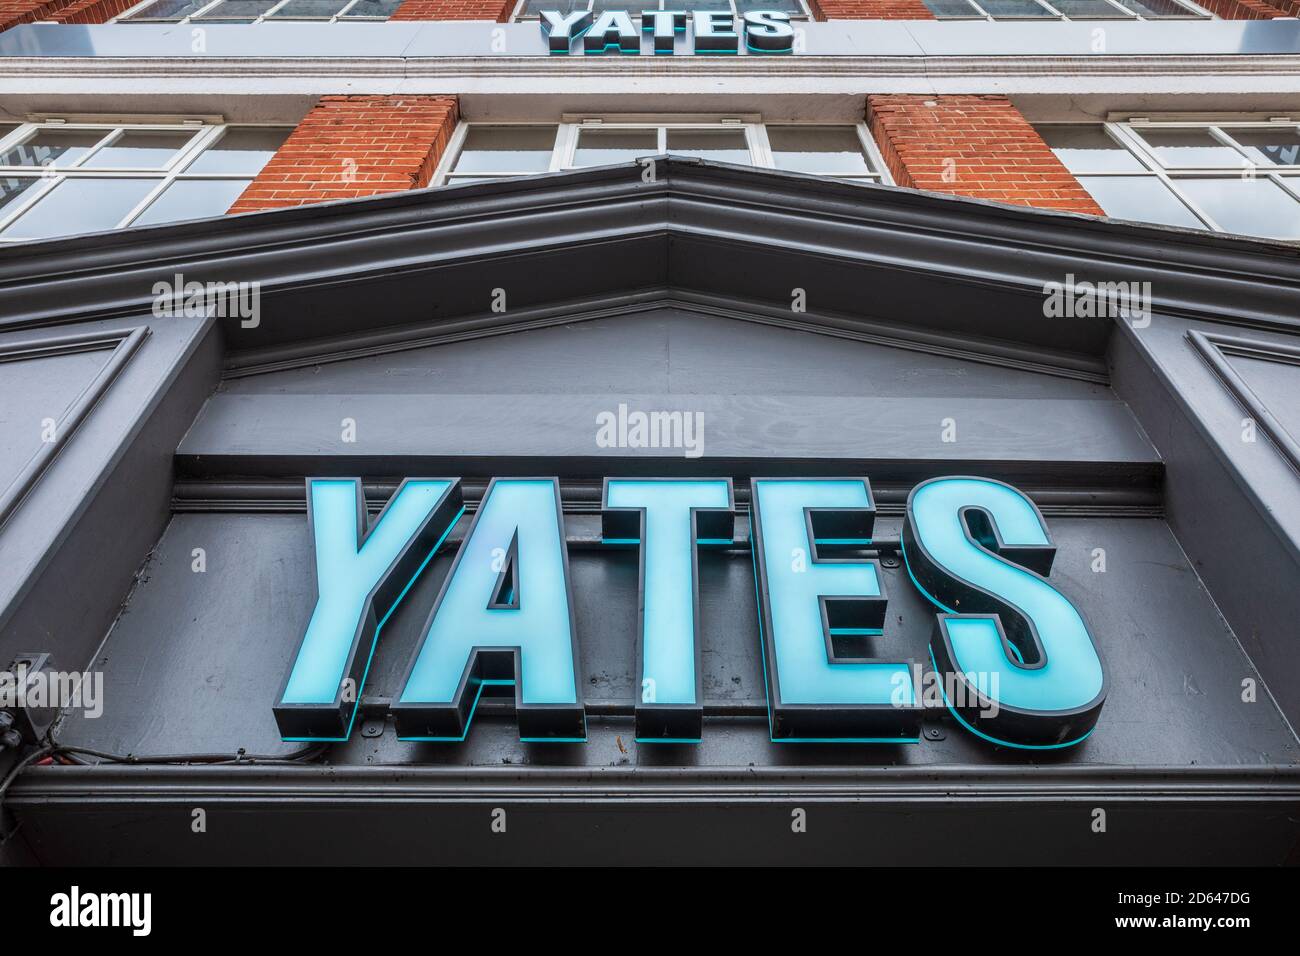 Yates Wine Lodge Ipswich - Ipswich Yates Wine Bar. Yates Ipswich High Street Party Pub Venue. Stock Photo